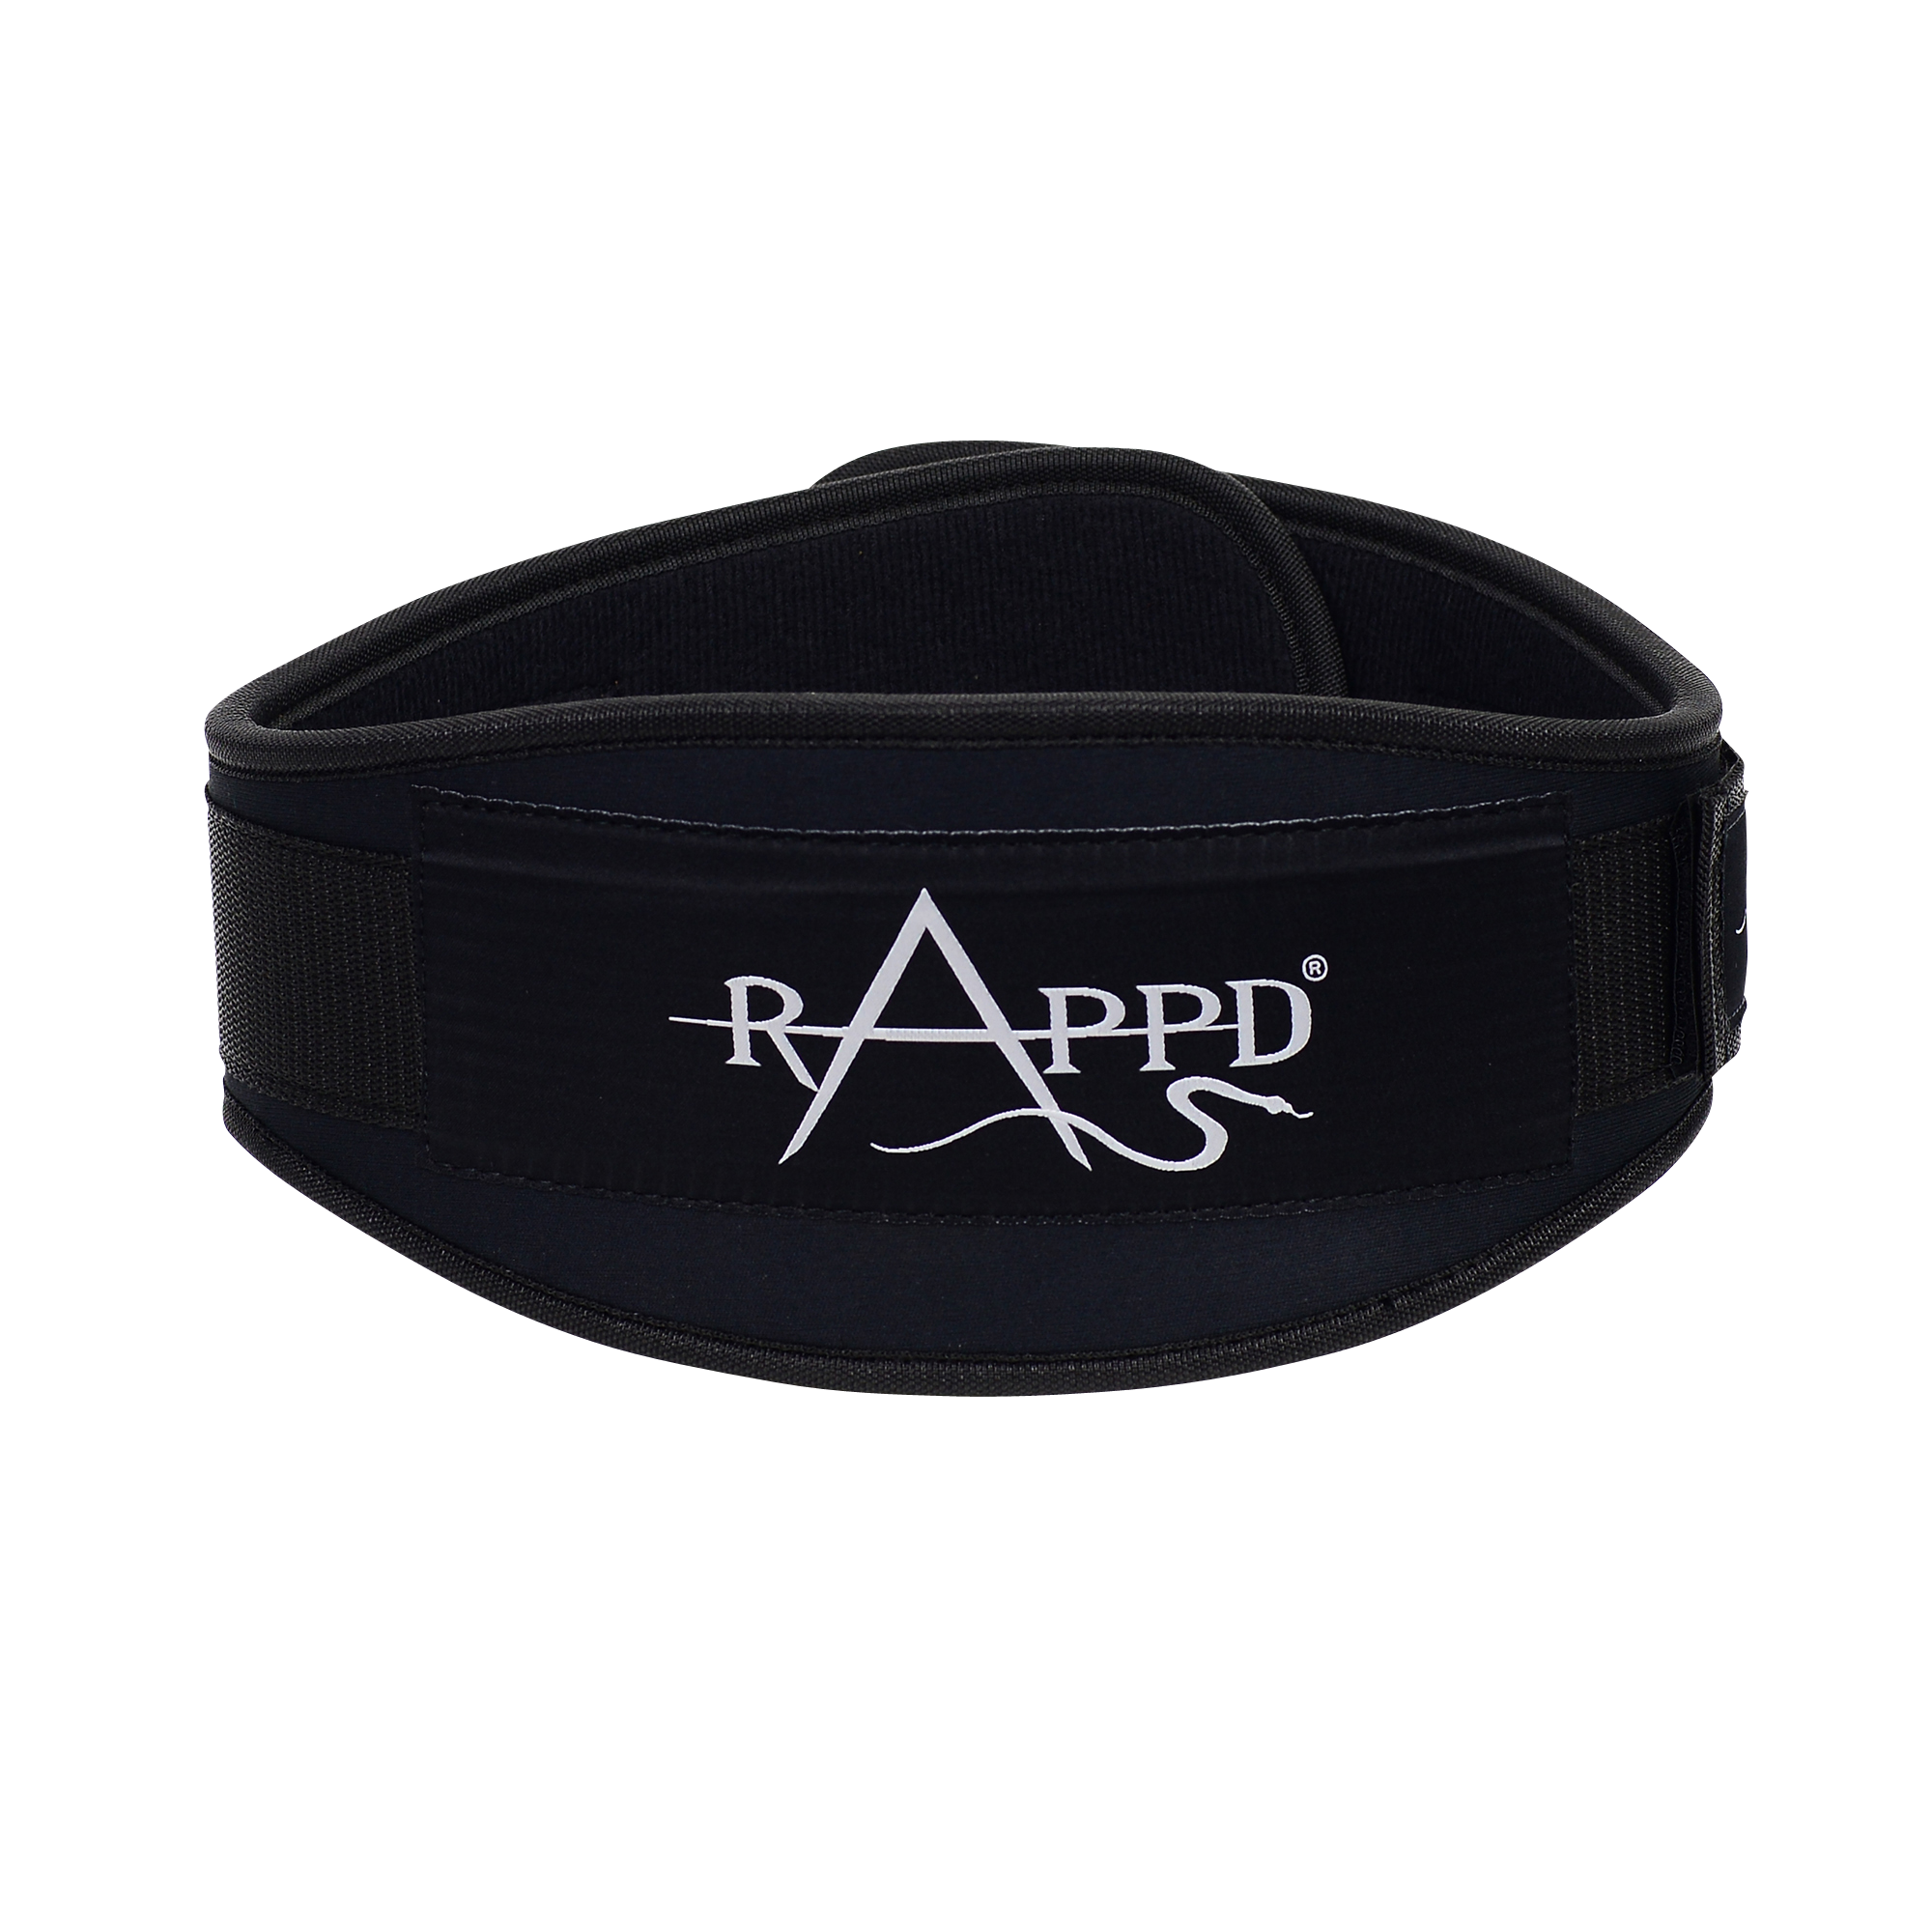 RAPPD 4" Neoprene Weightlifting Belt